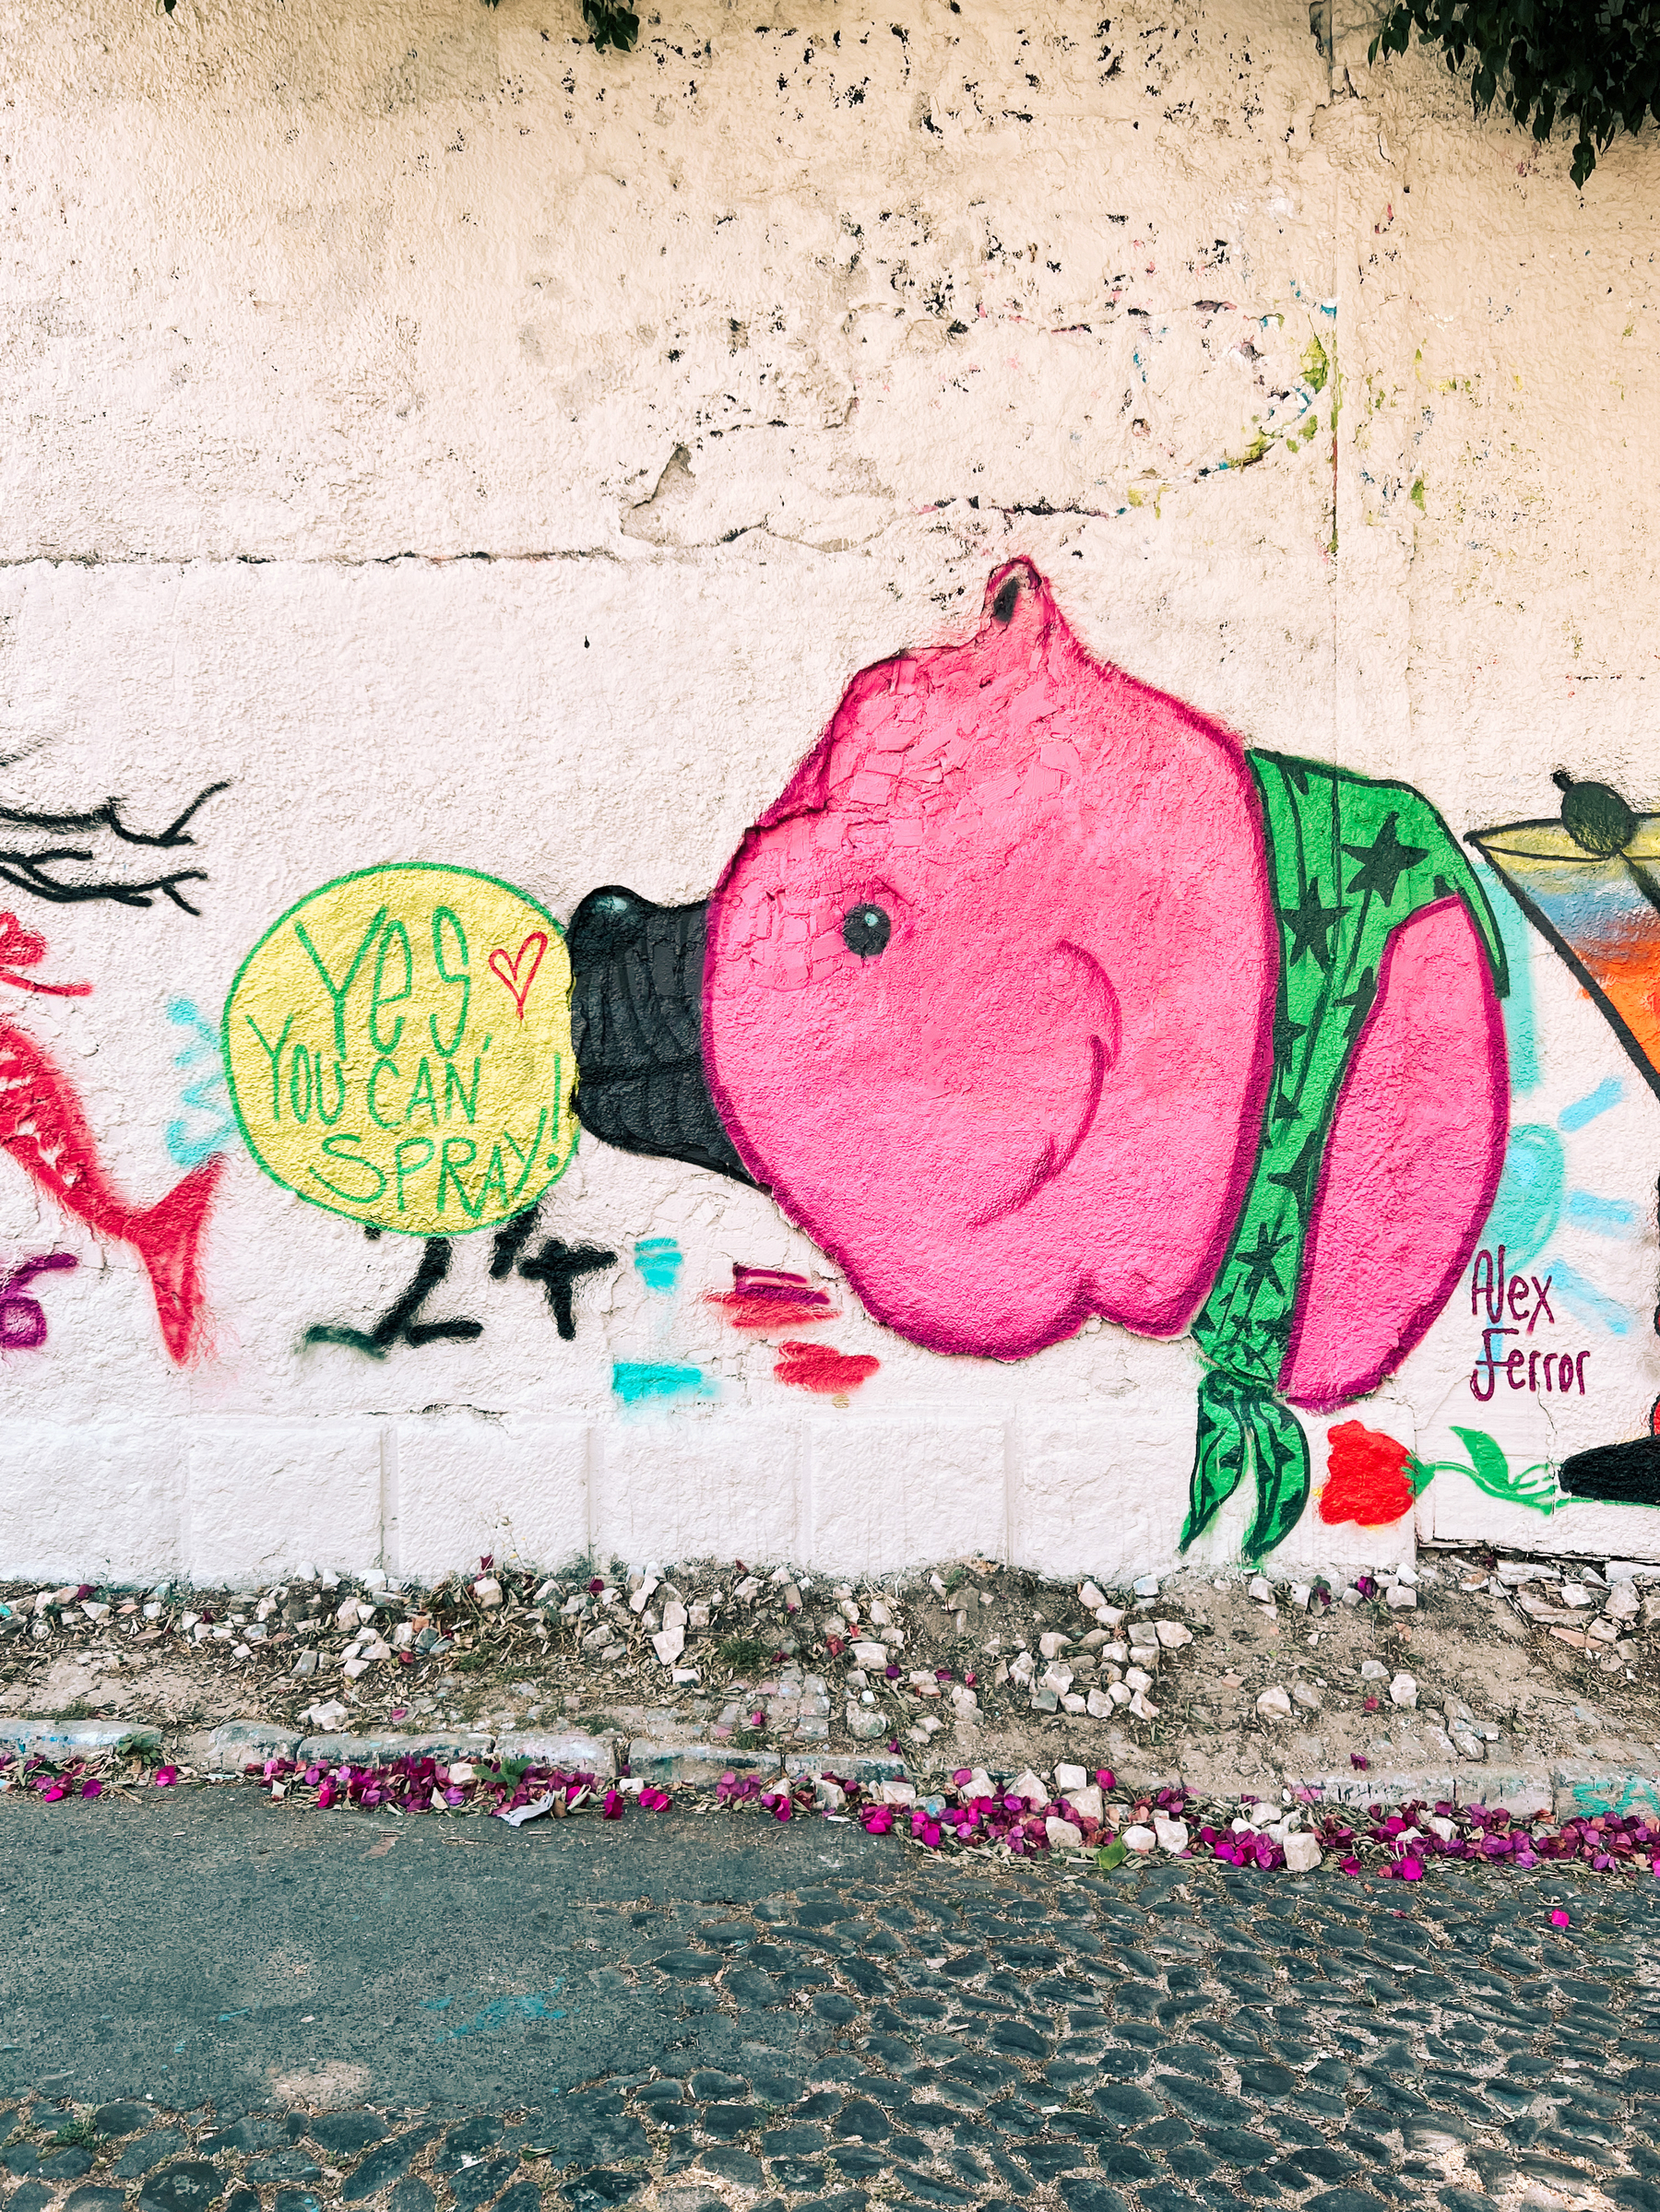 A graffitied wall. Looks like a pink bear…